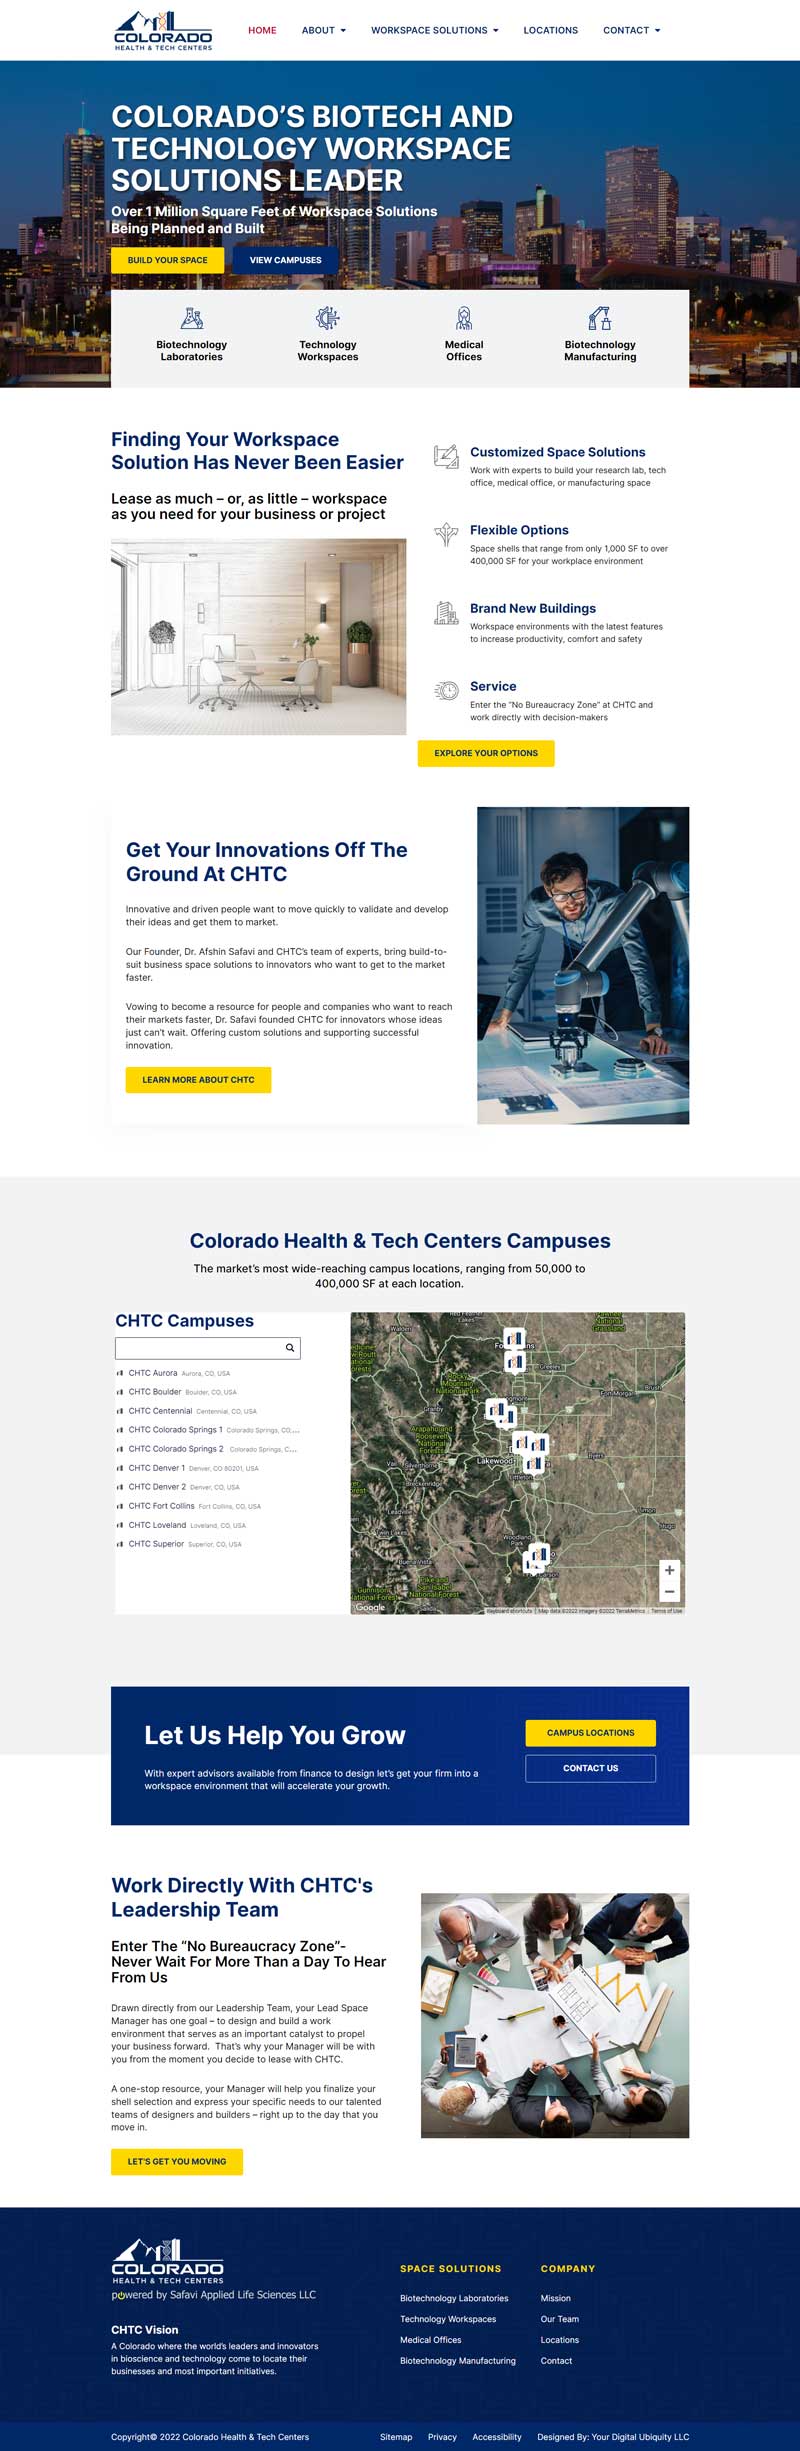 Colorado Health & Tech Centers Home Page